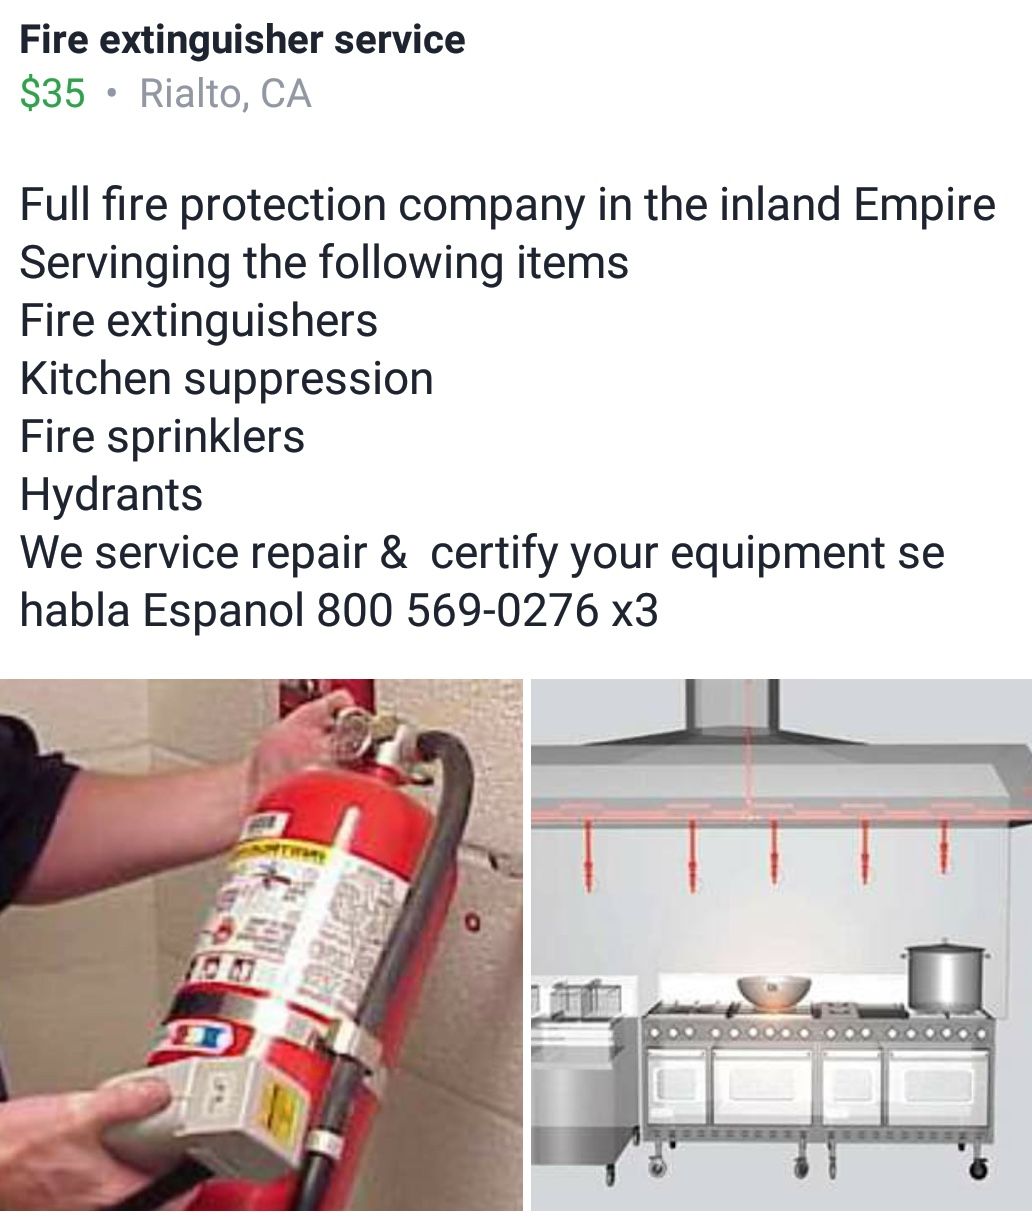 Fire extinguisher sales